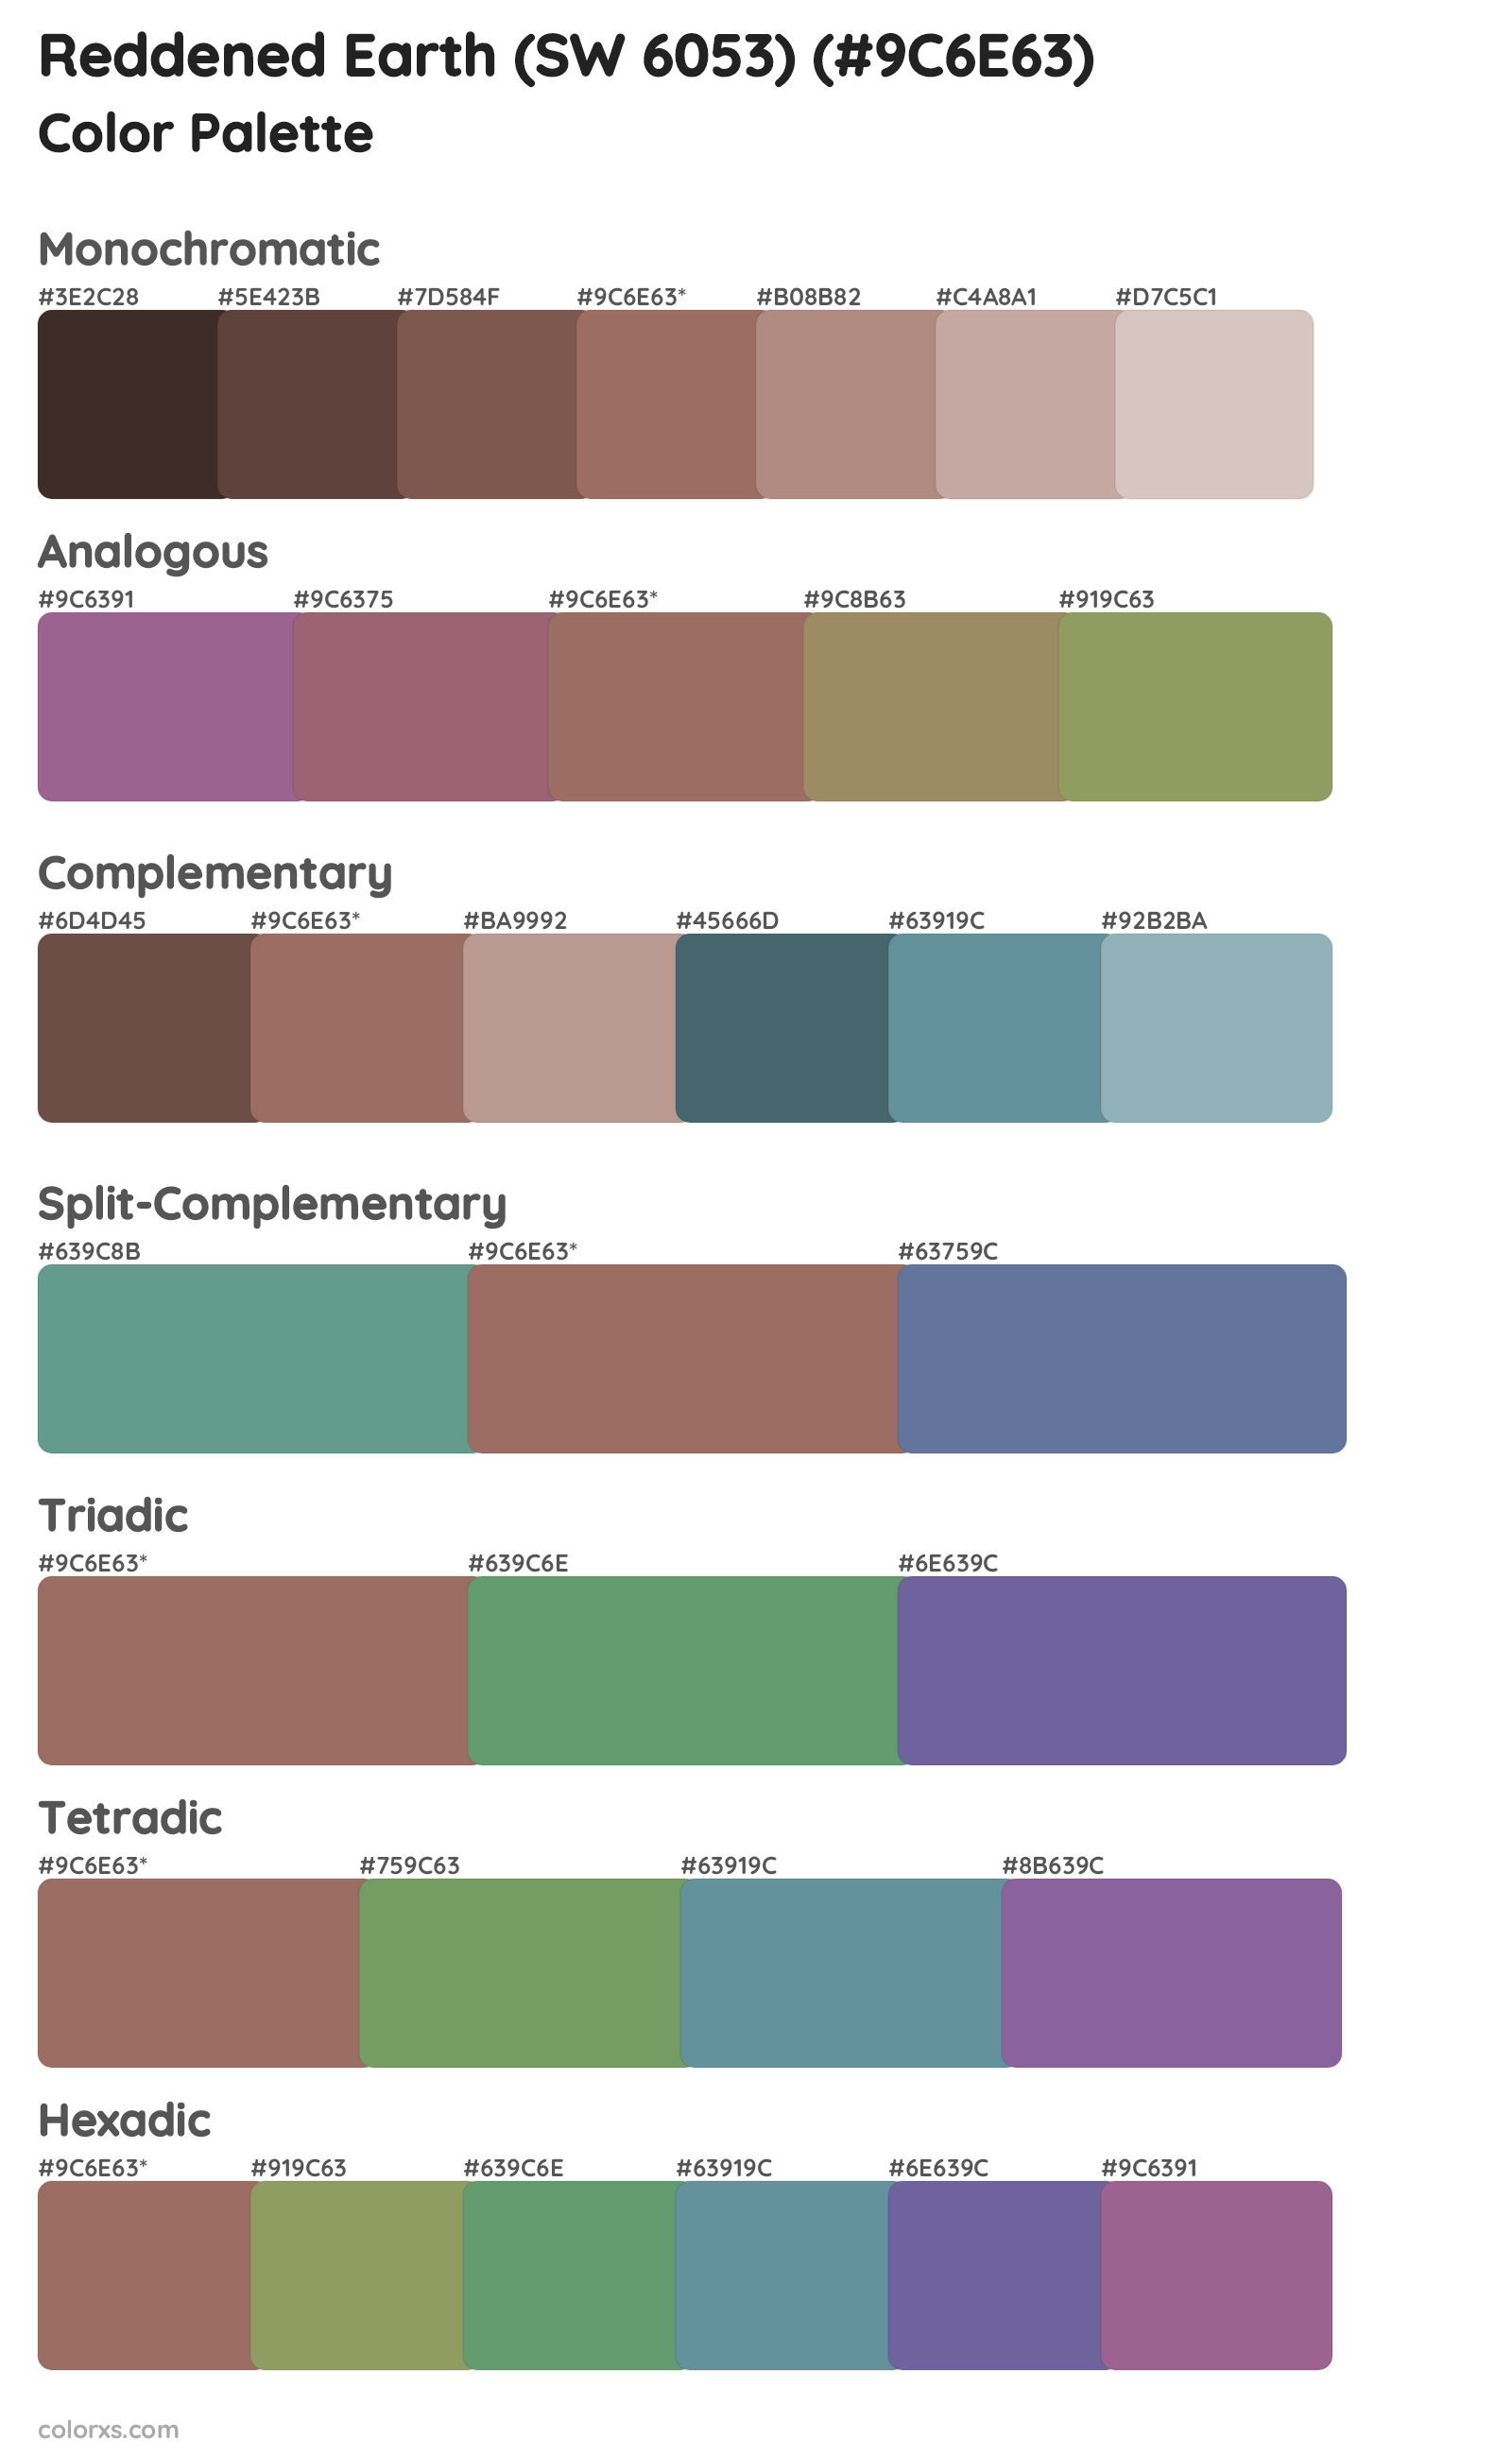 Reddened Earth (SW 6053) Color Scheme Palettes